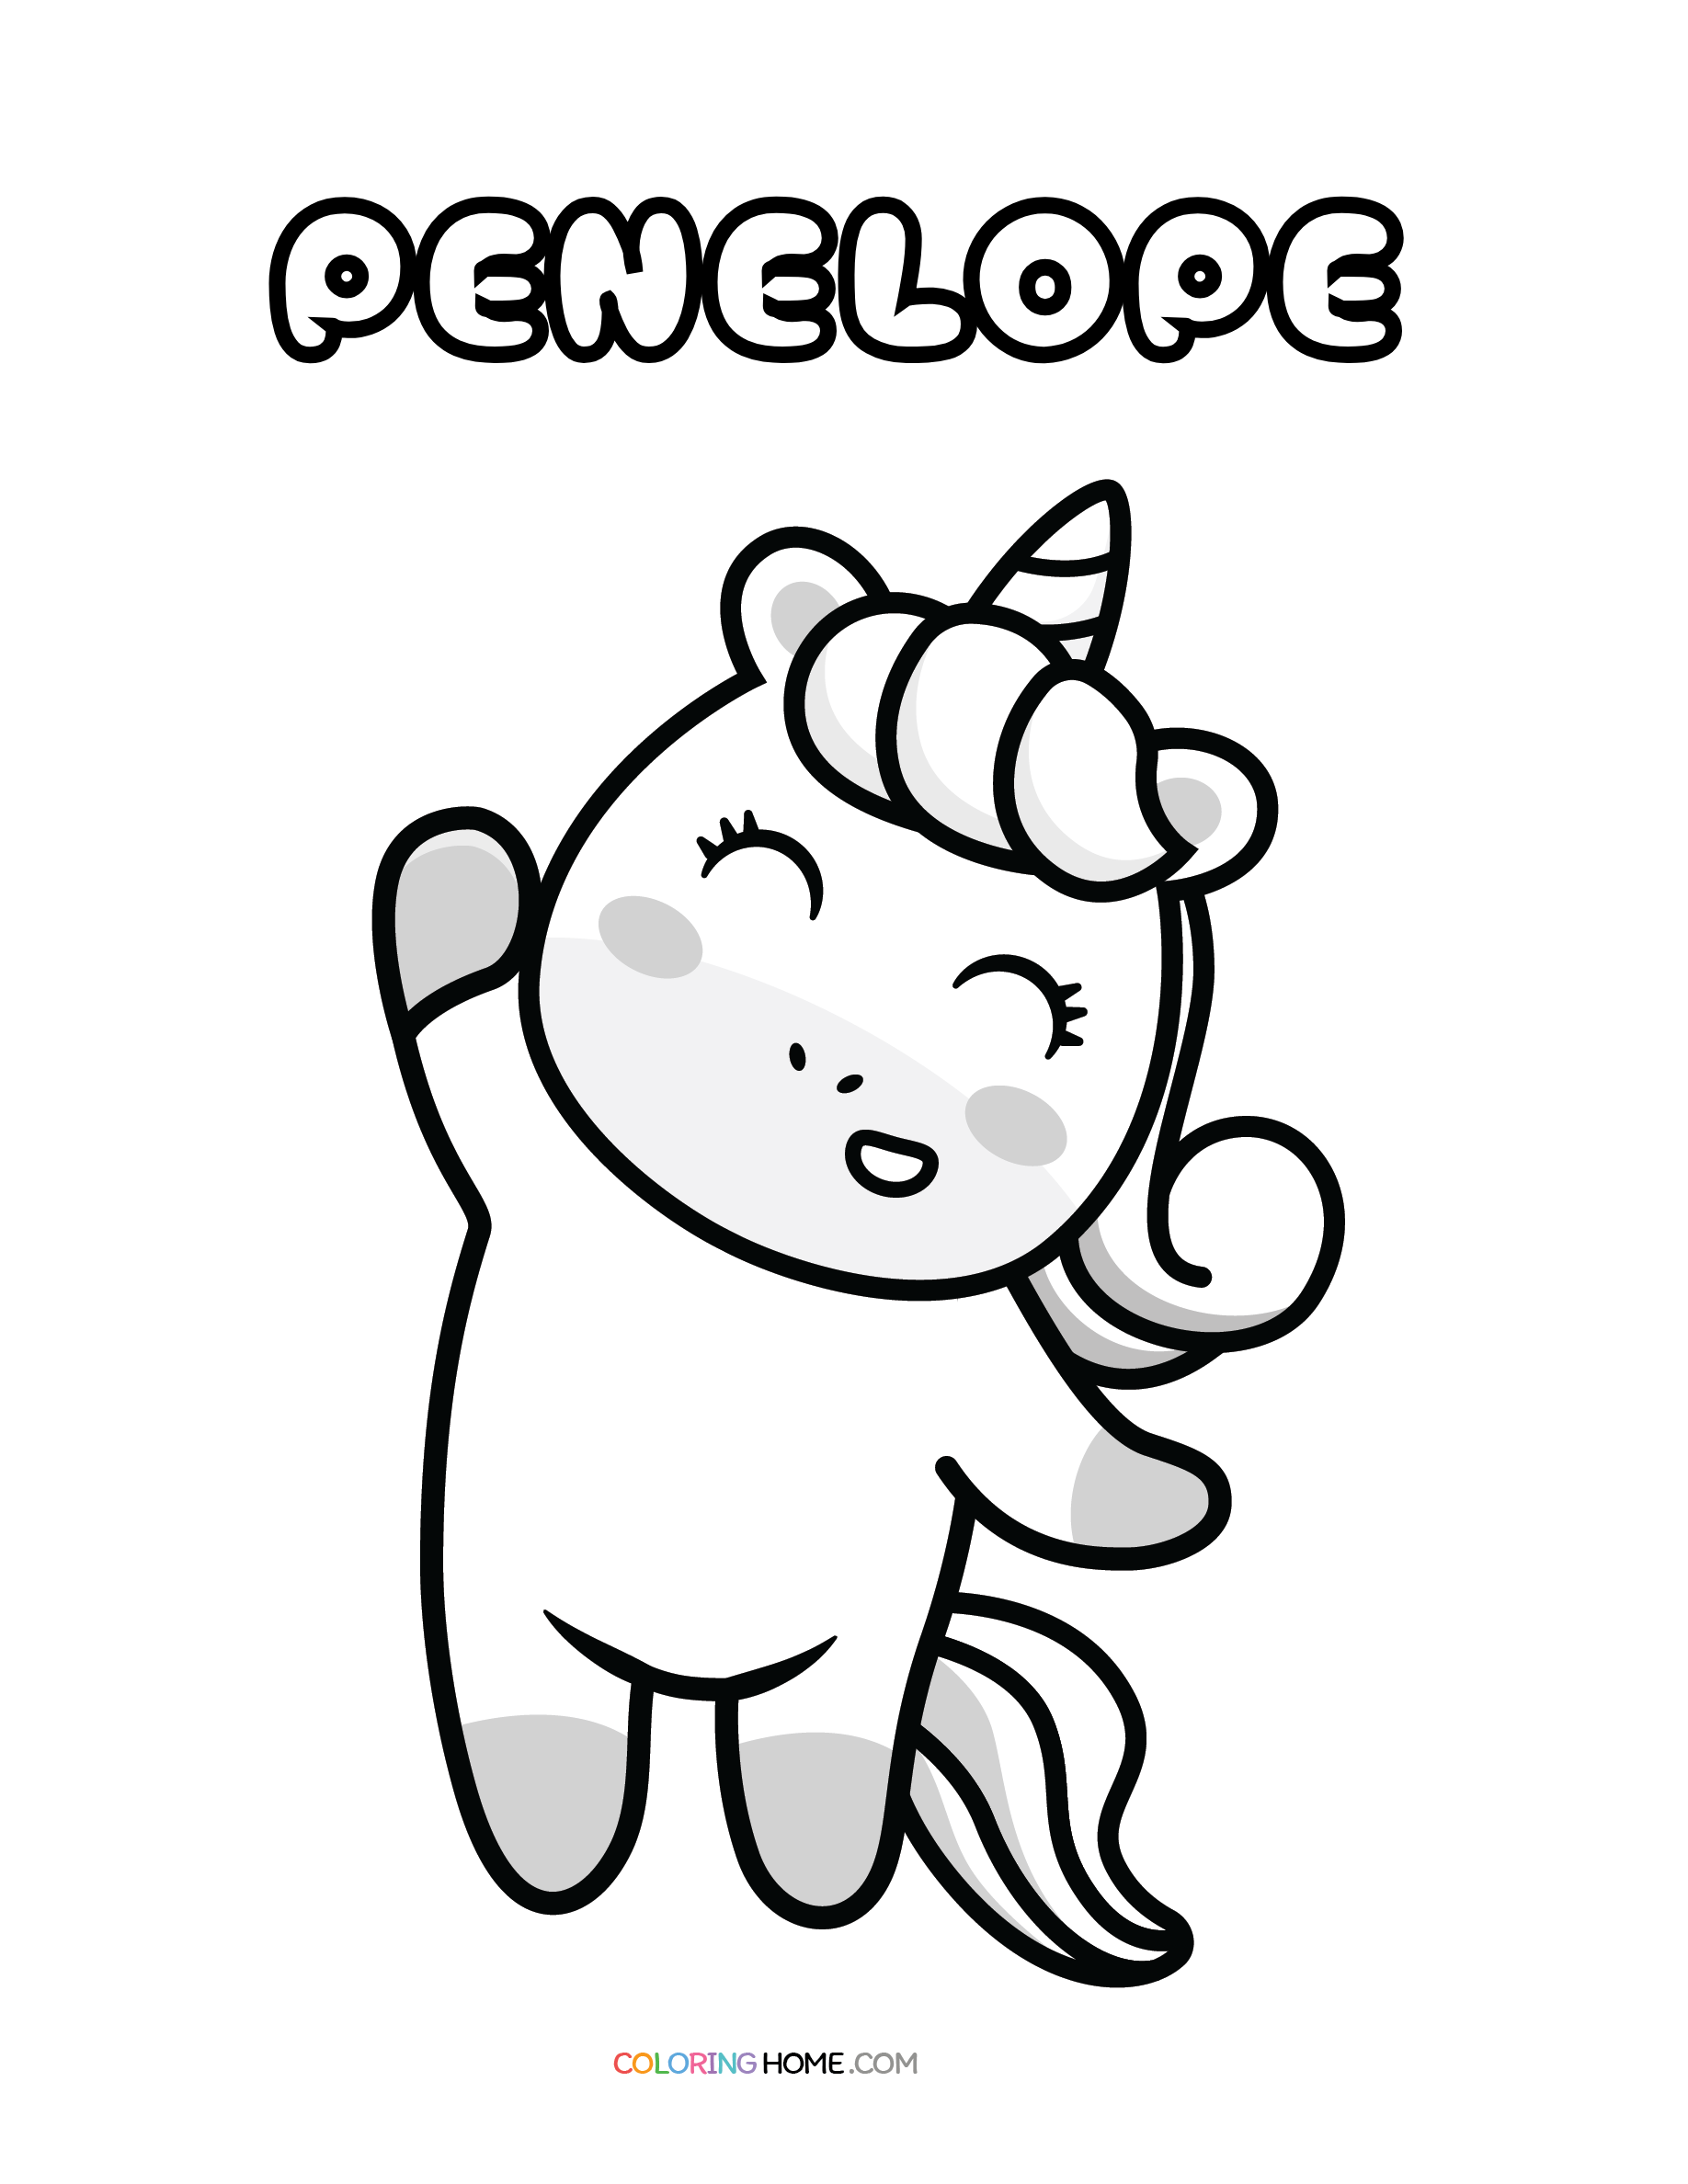 Penelope unicorn coloring page